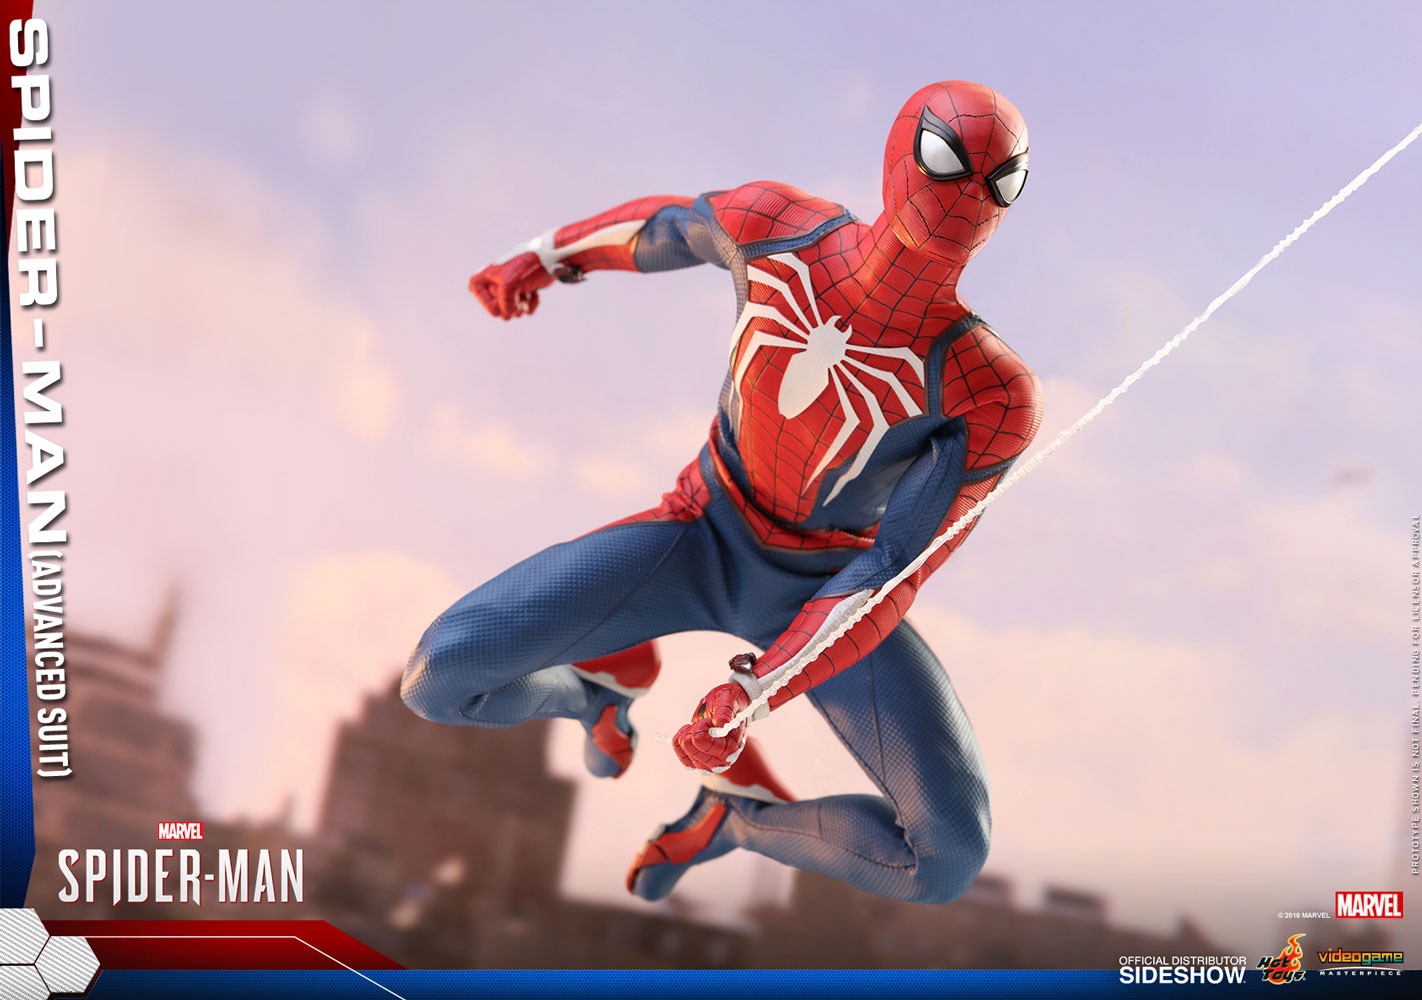 Spider-Man Advanced Suit (Prototype Shown) View 12